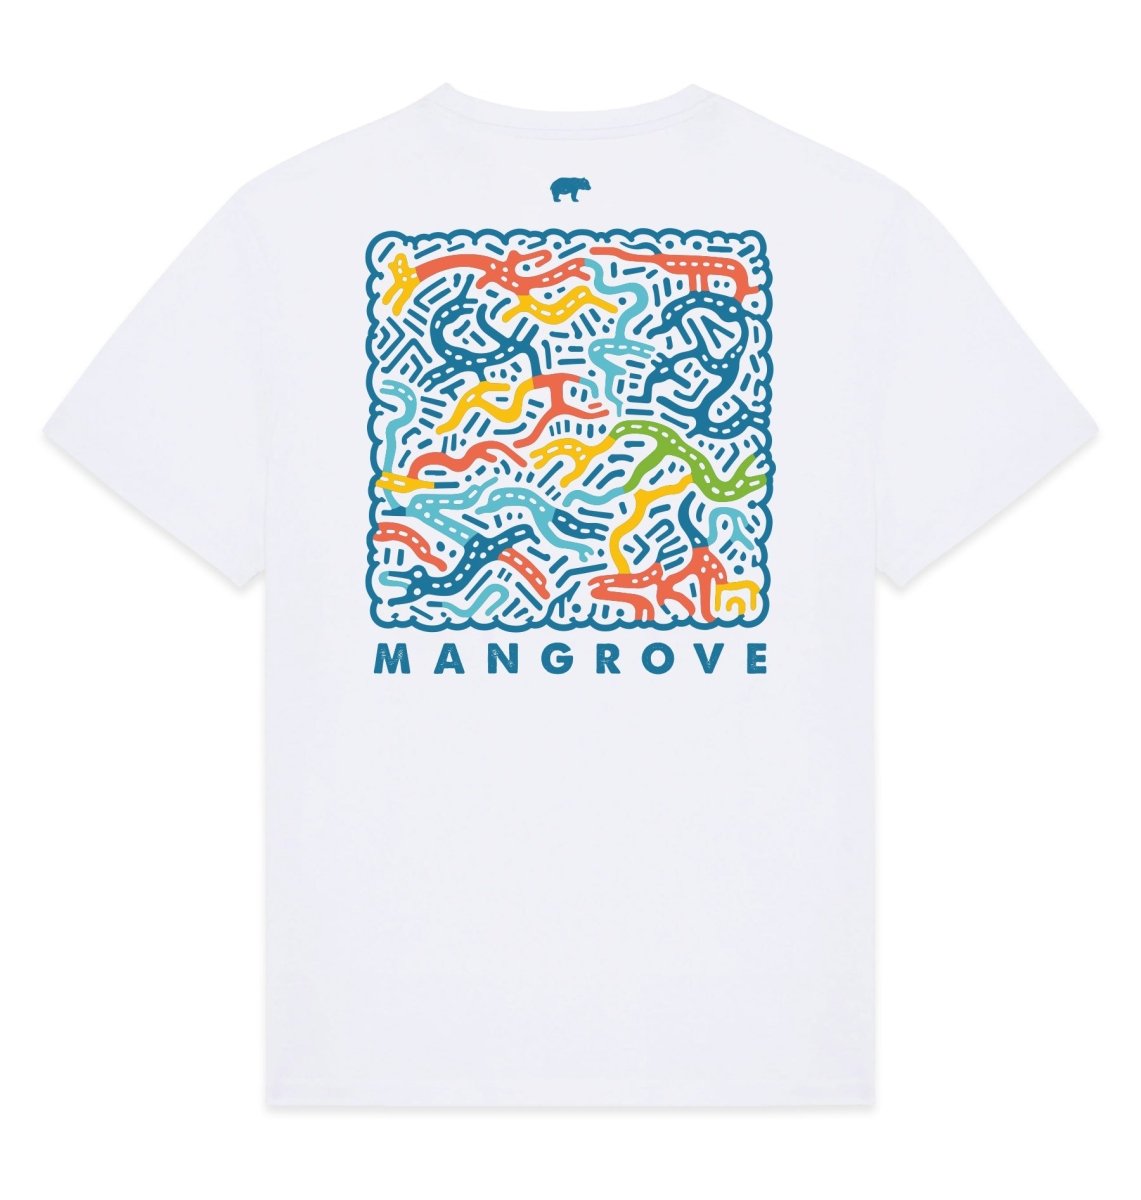 Mangrove Graphic Mens T-shirt - Blue Panda